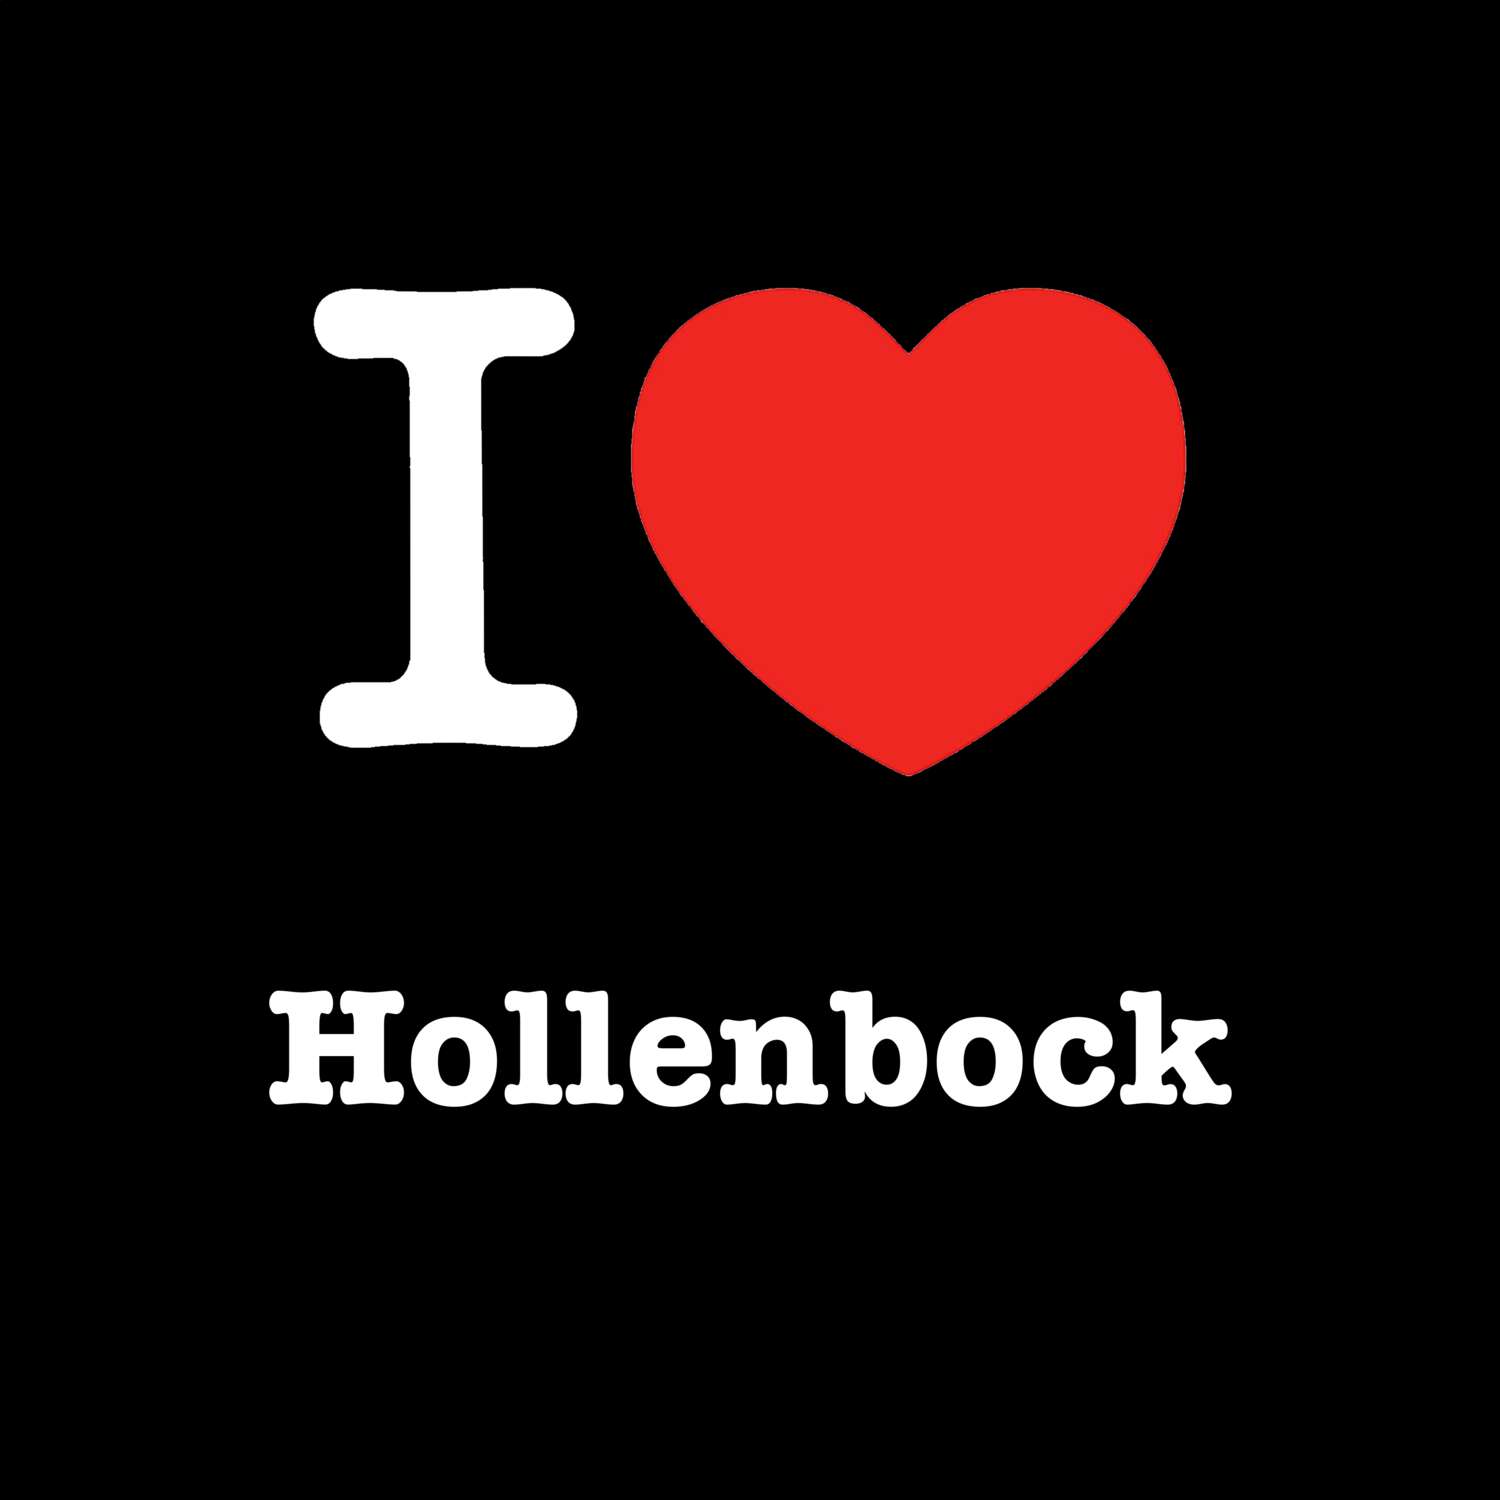 Hollenbock T-Shirt »I love«